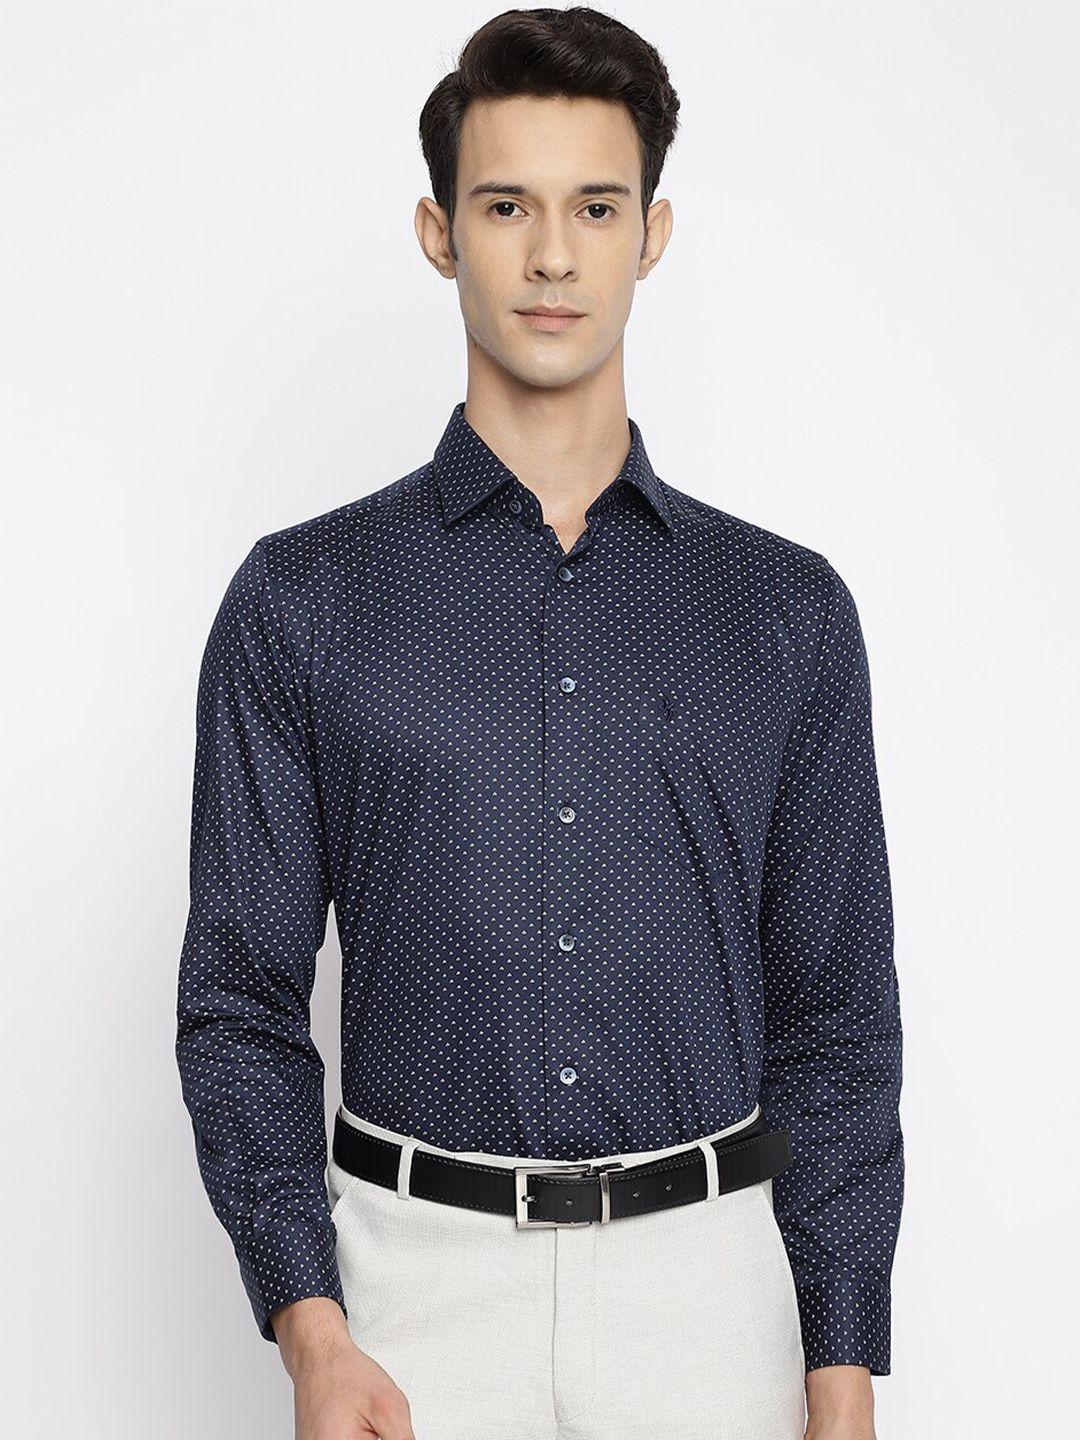 cantabil men navy blue & white printed cotton formal shirt